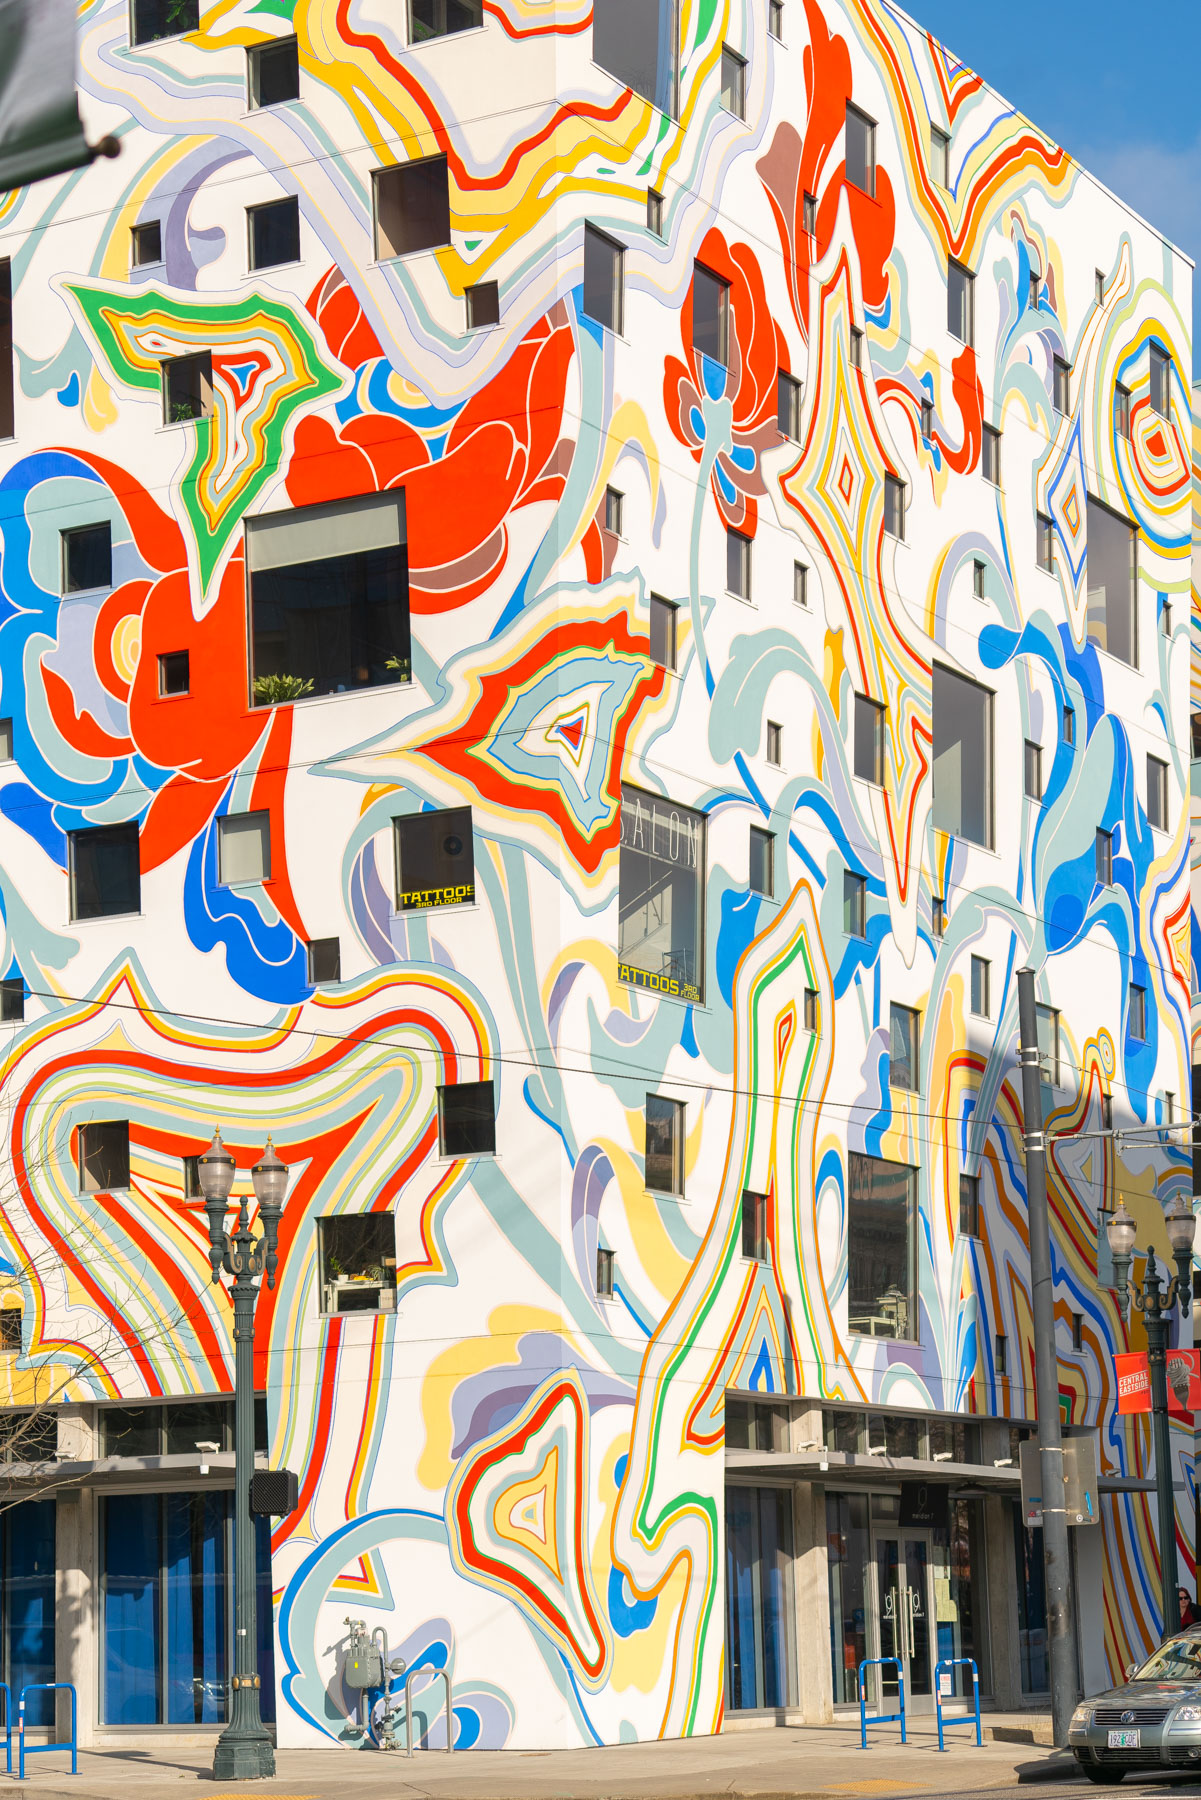 colorful building in Portland Oregon
Best Portland murals